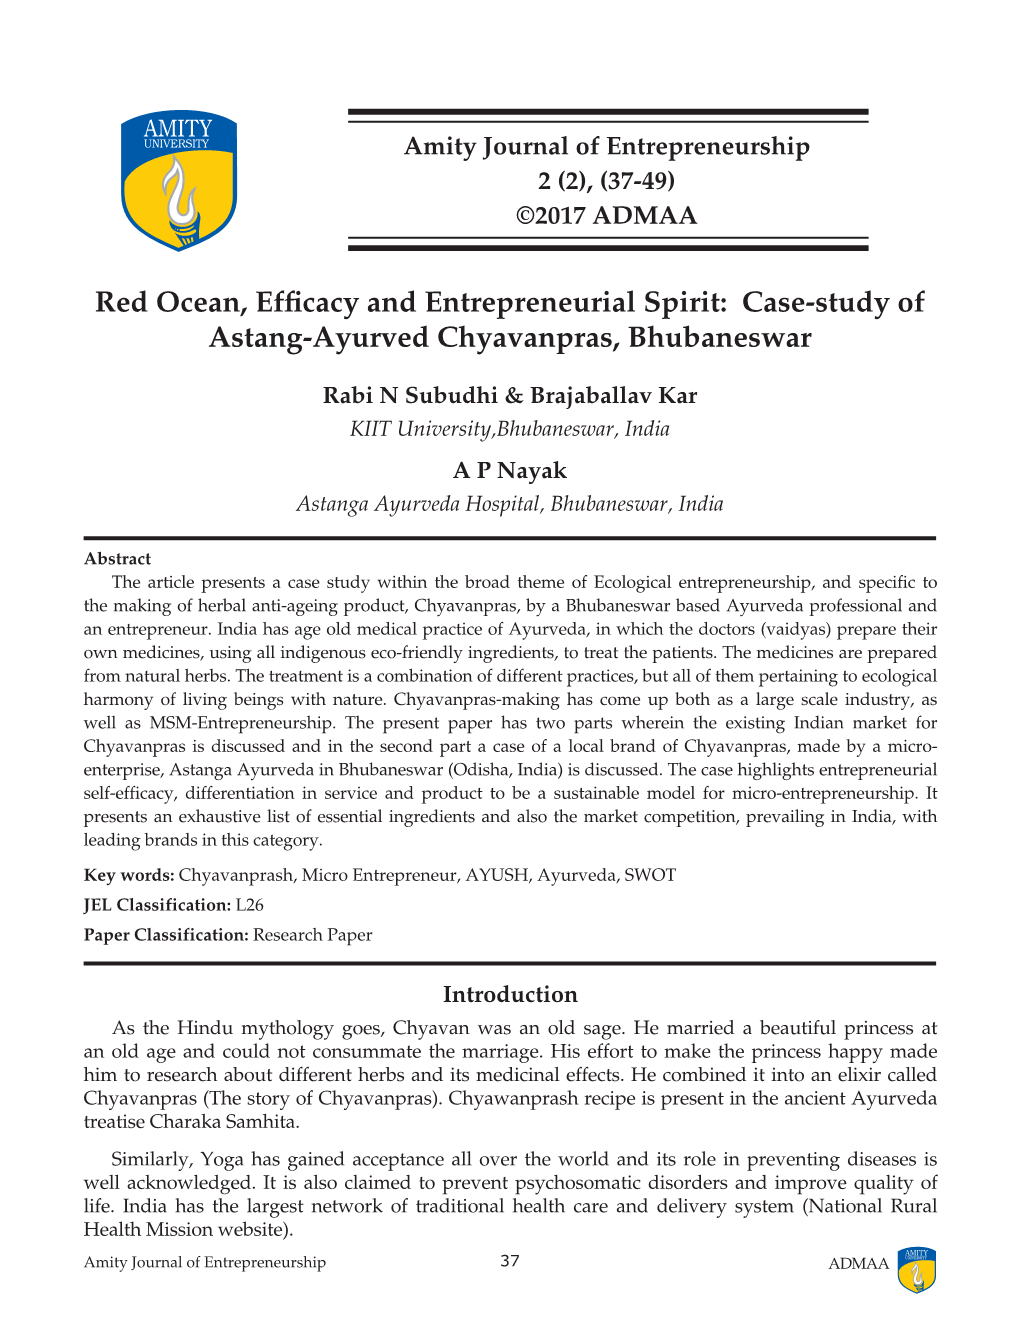 Case-Study of Astang-Ayurved Chyavanpras, Bhubaneswar